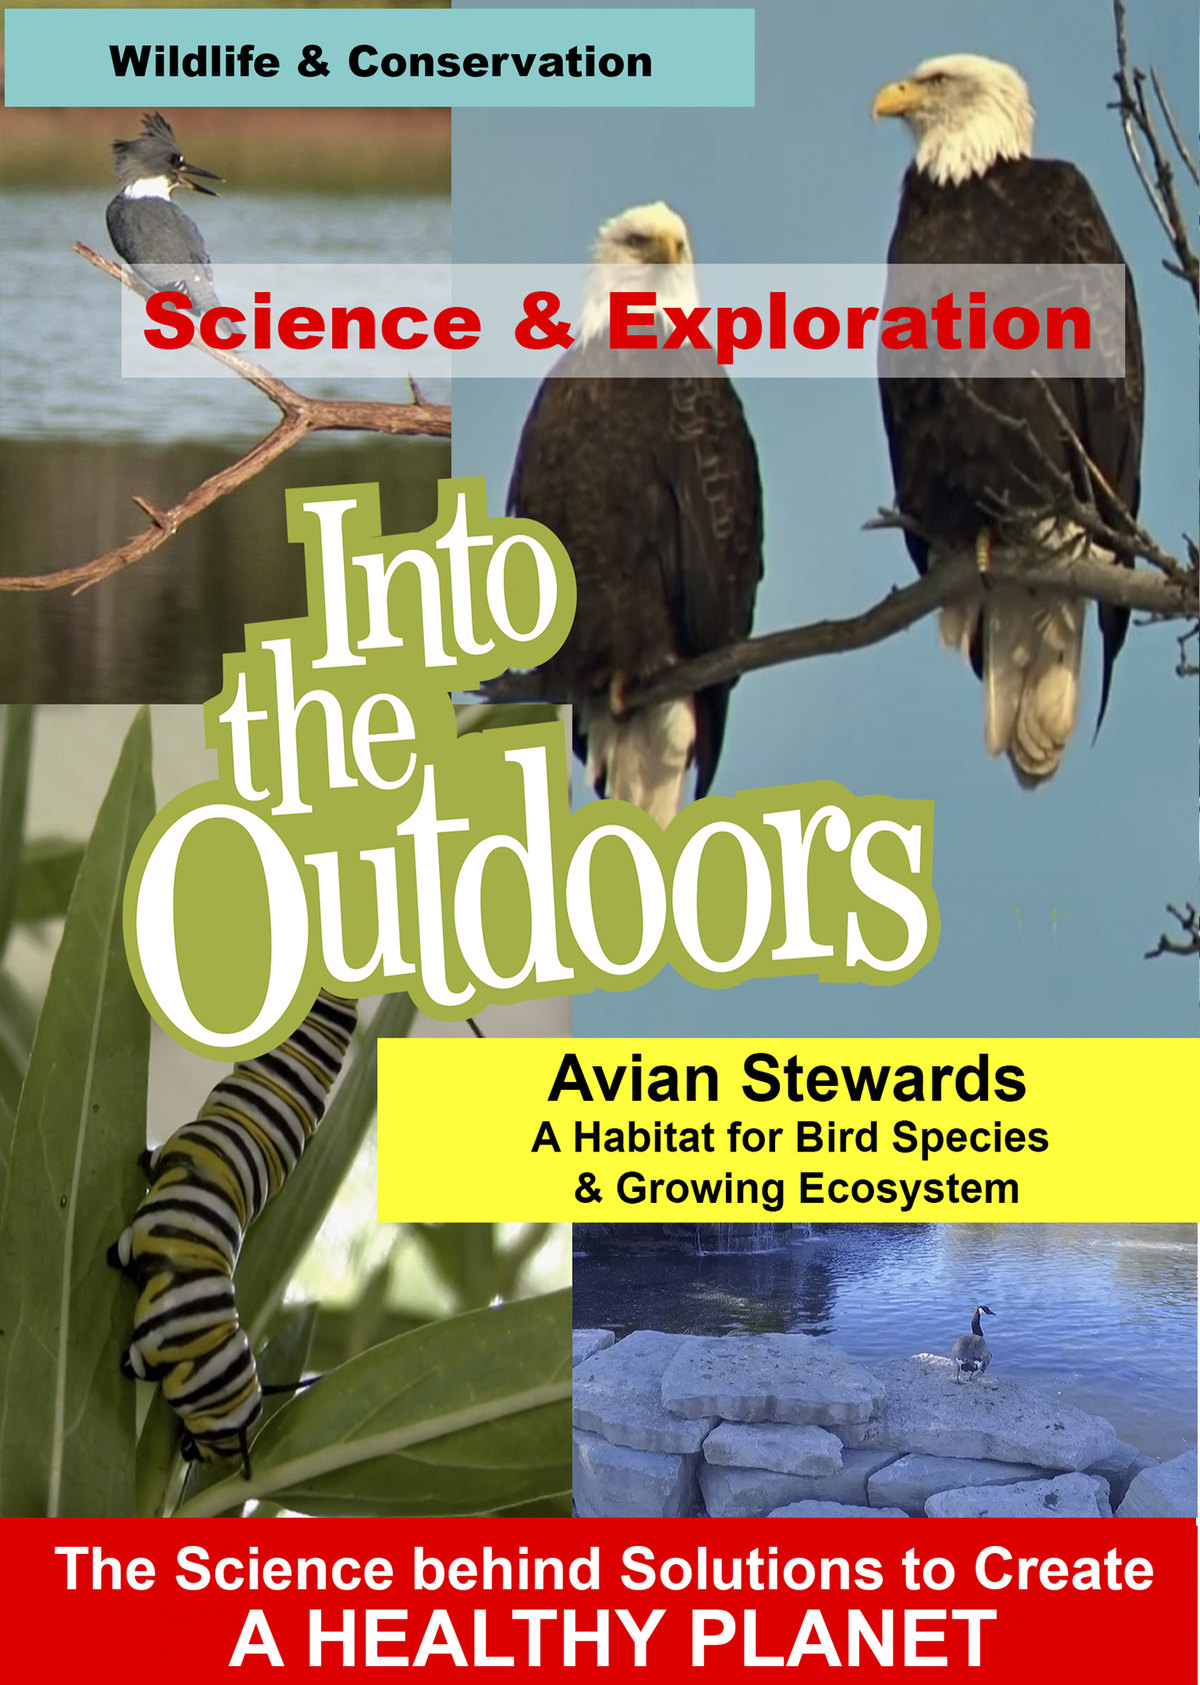 K4988 - Avian Stewards - A Habitat for Bird Species & Growing Ecosystem